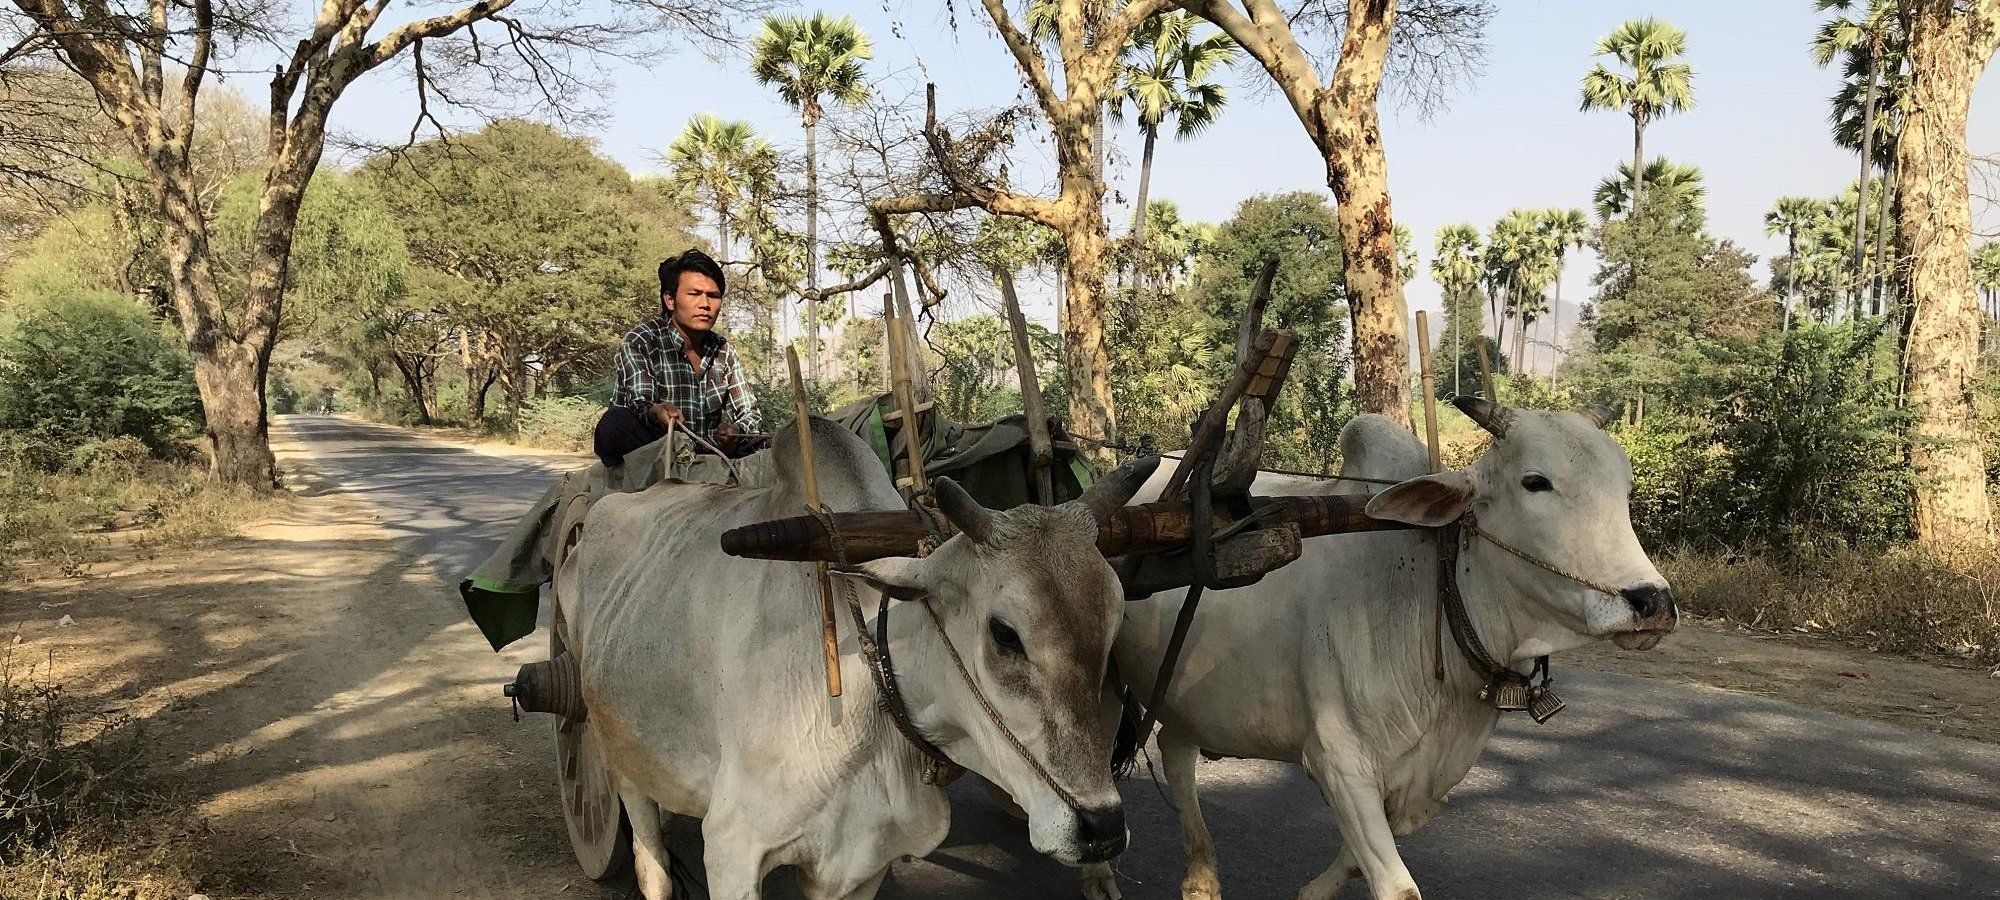 Ox cart - common sight in Myanmar